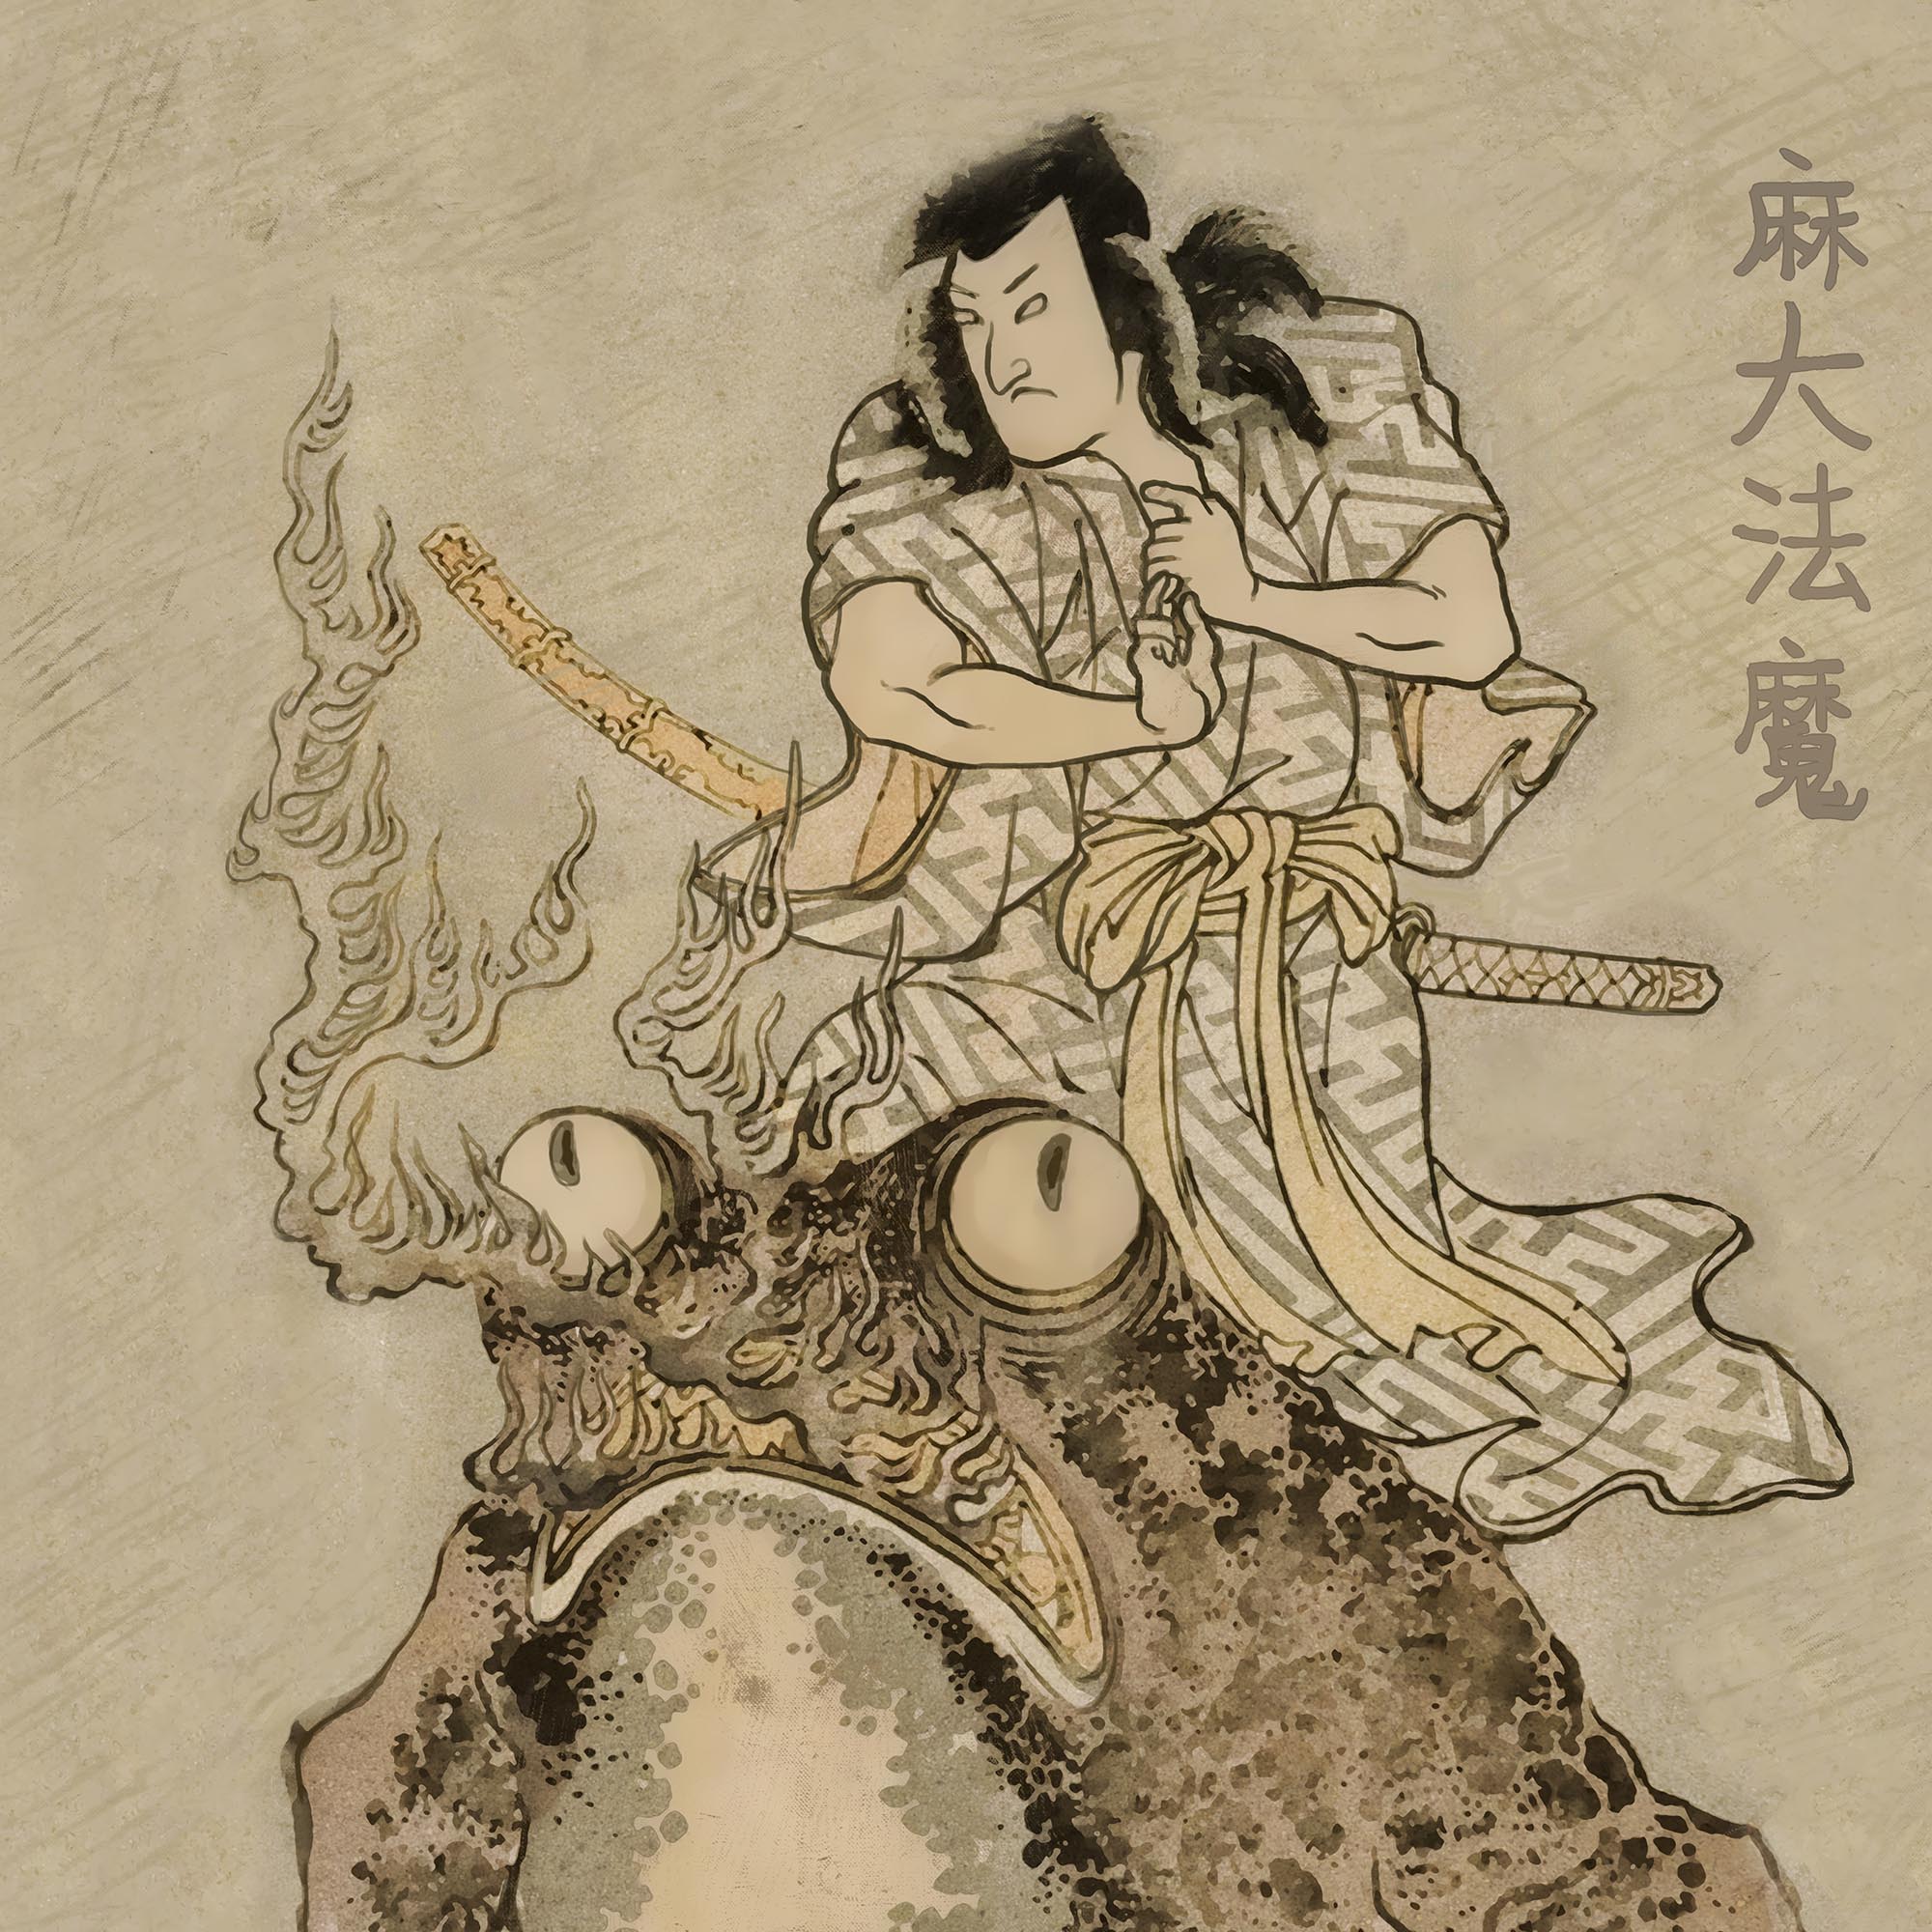 giclee 6"x8" Utagawa Kunisada: Magician with a Giant Toad, Ukiyo-e Samurai Ronin Sorcerer Kawaii Mythology Occult Fantasy Japanese Fine Art Print